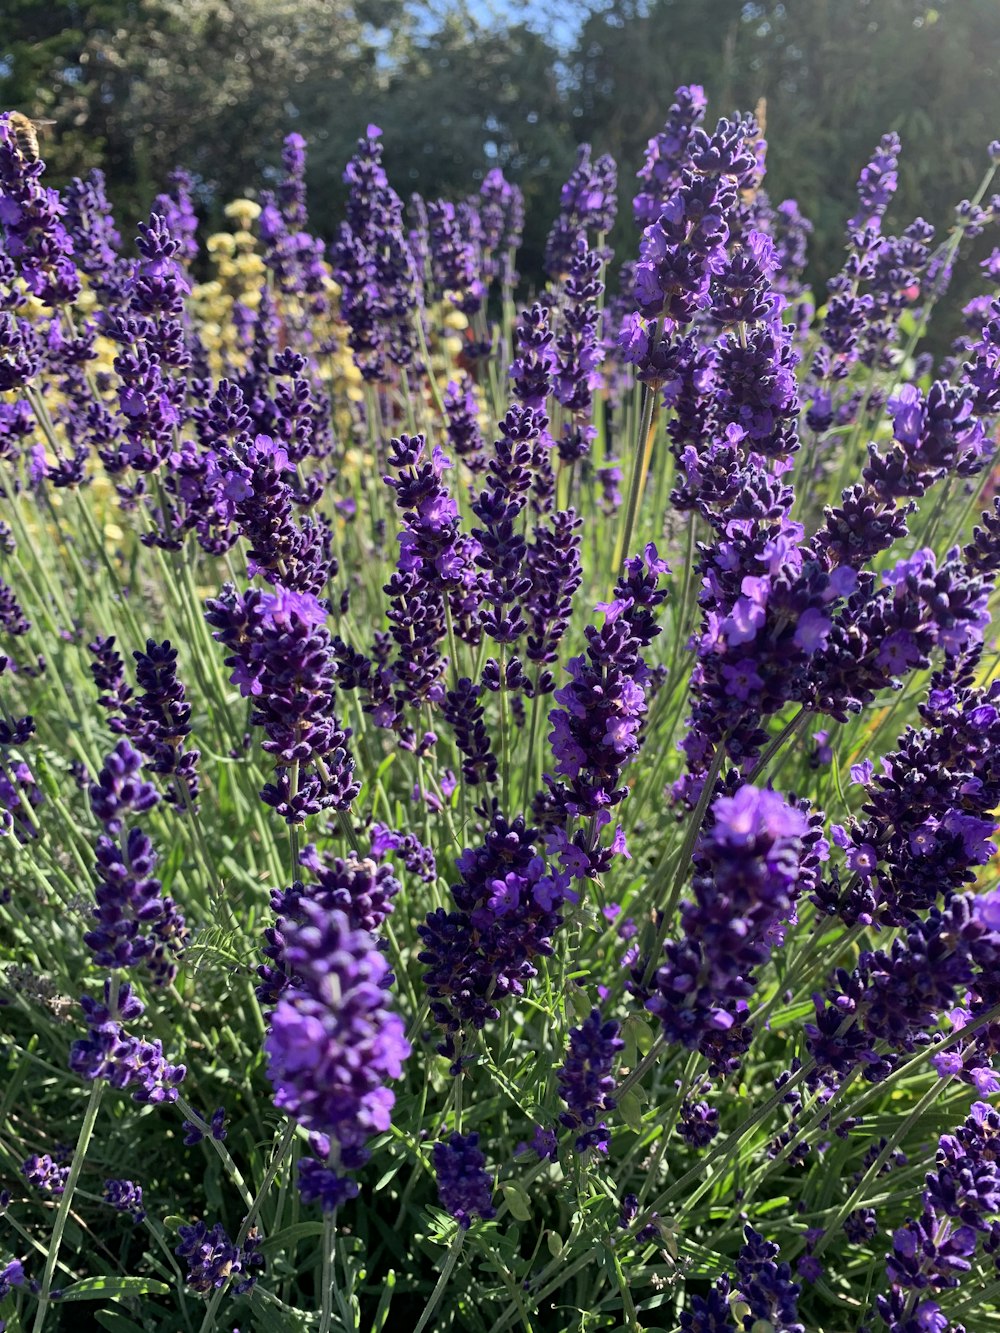 purple flowers in shallow focus lens